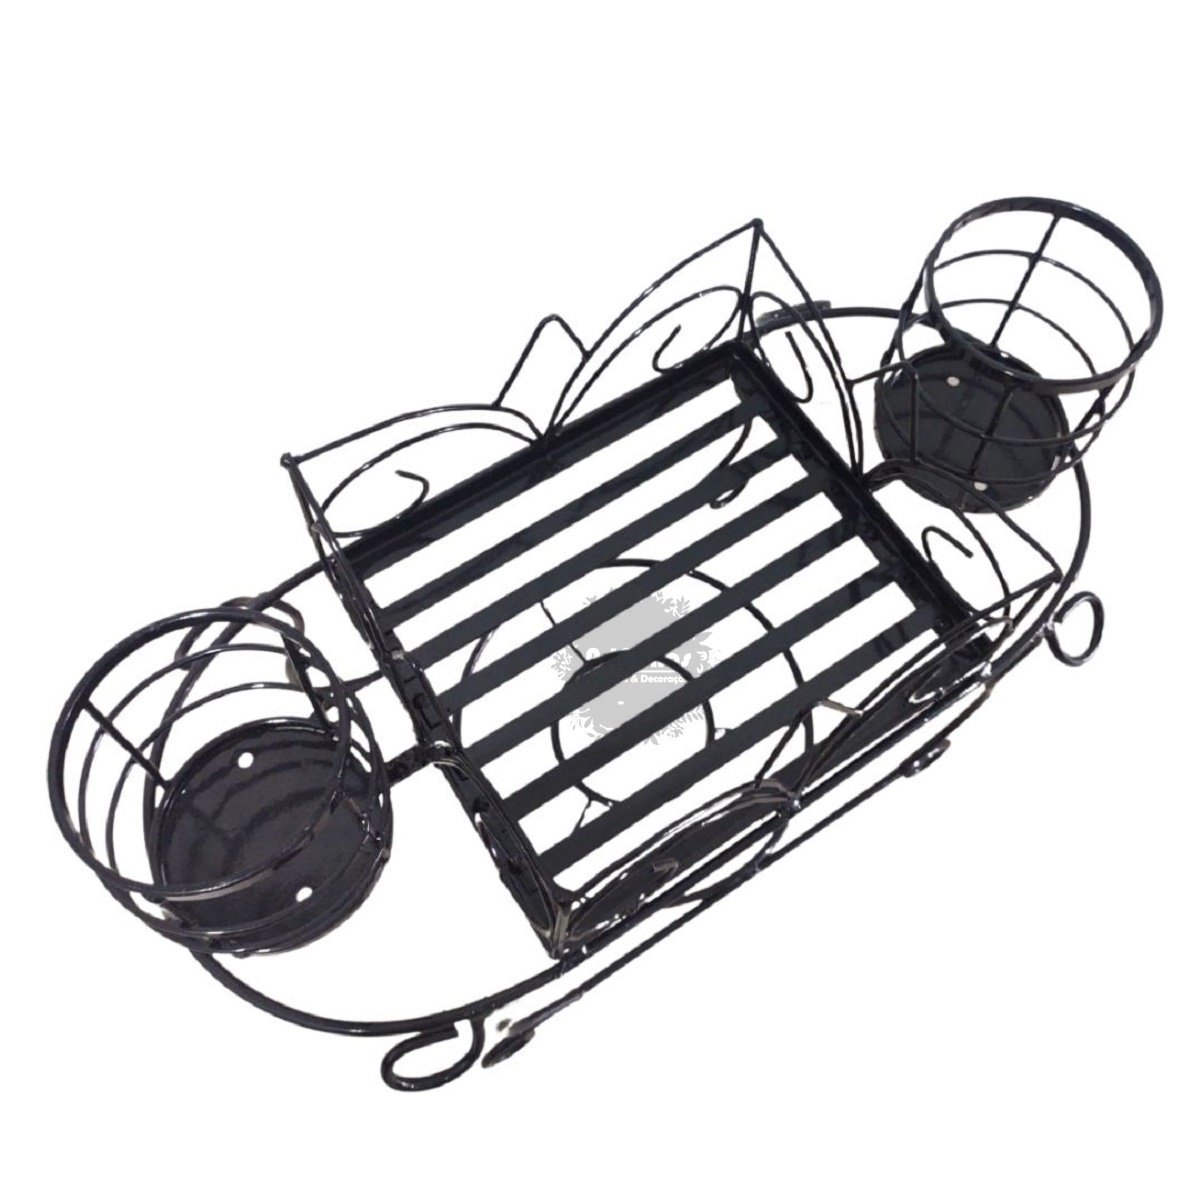 Escorredor de louças mesa ferro rústico artesanal - 5